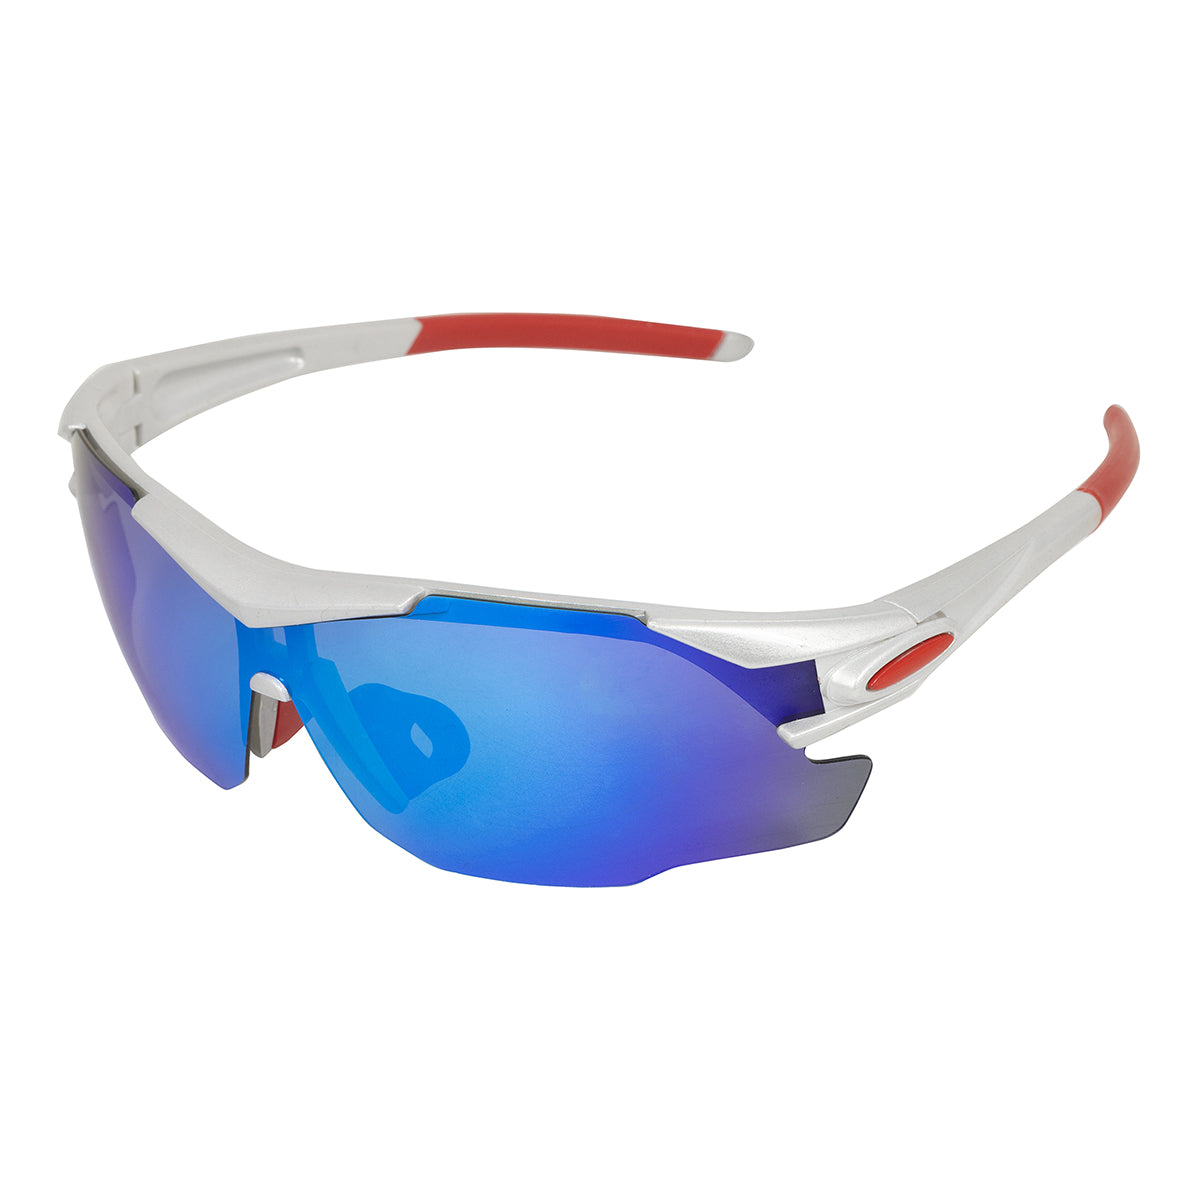 Huracan Active Sunglasses (Polarized Protection)